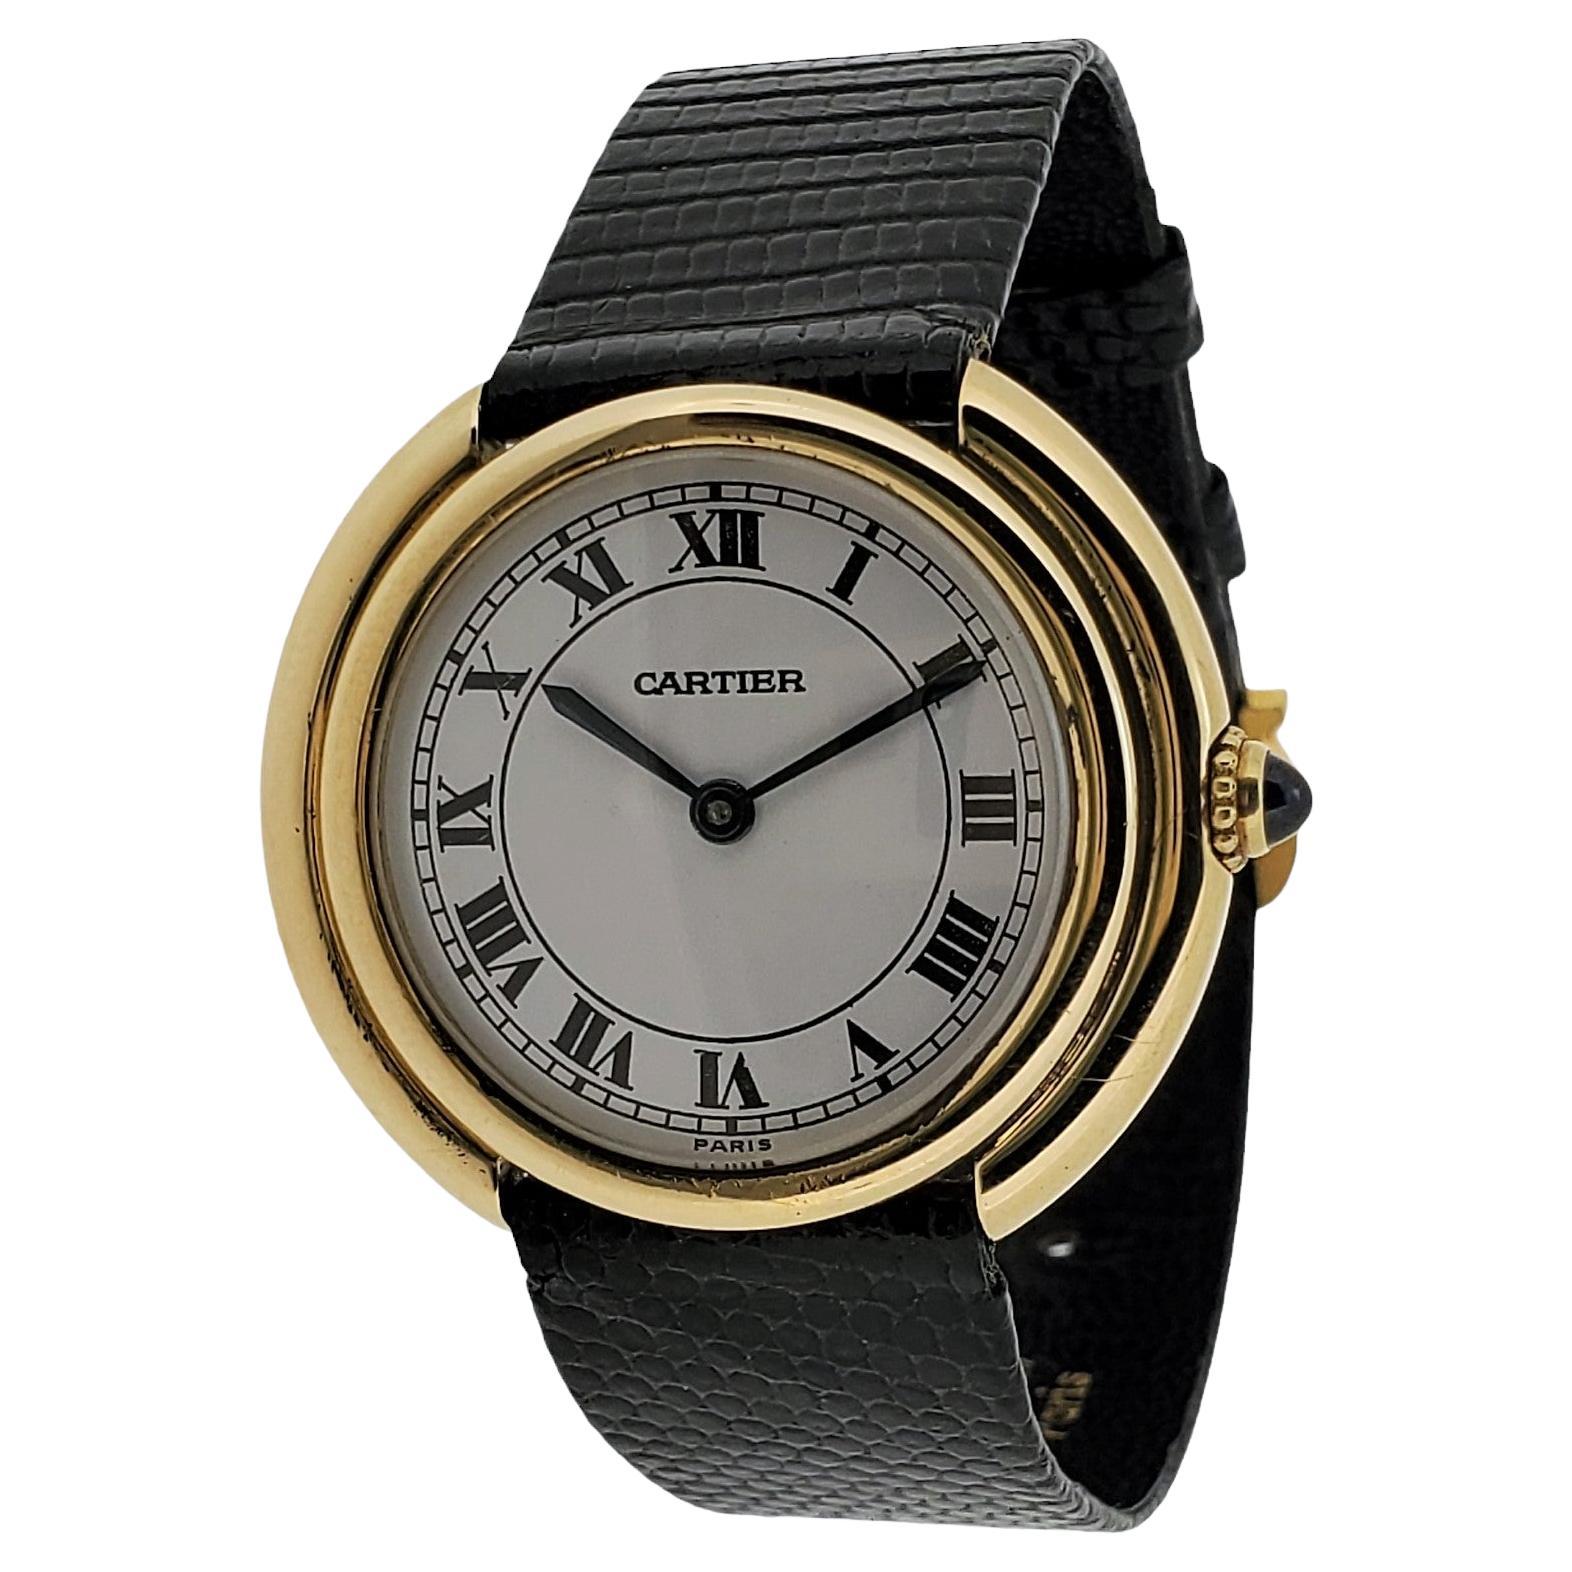 Cartier Paris Vendome Large Automatic Watch with Deployant Buckle, circa 1975 For Sale